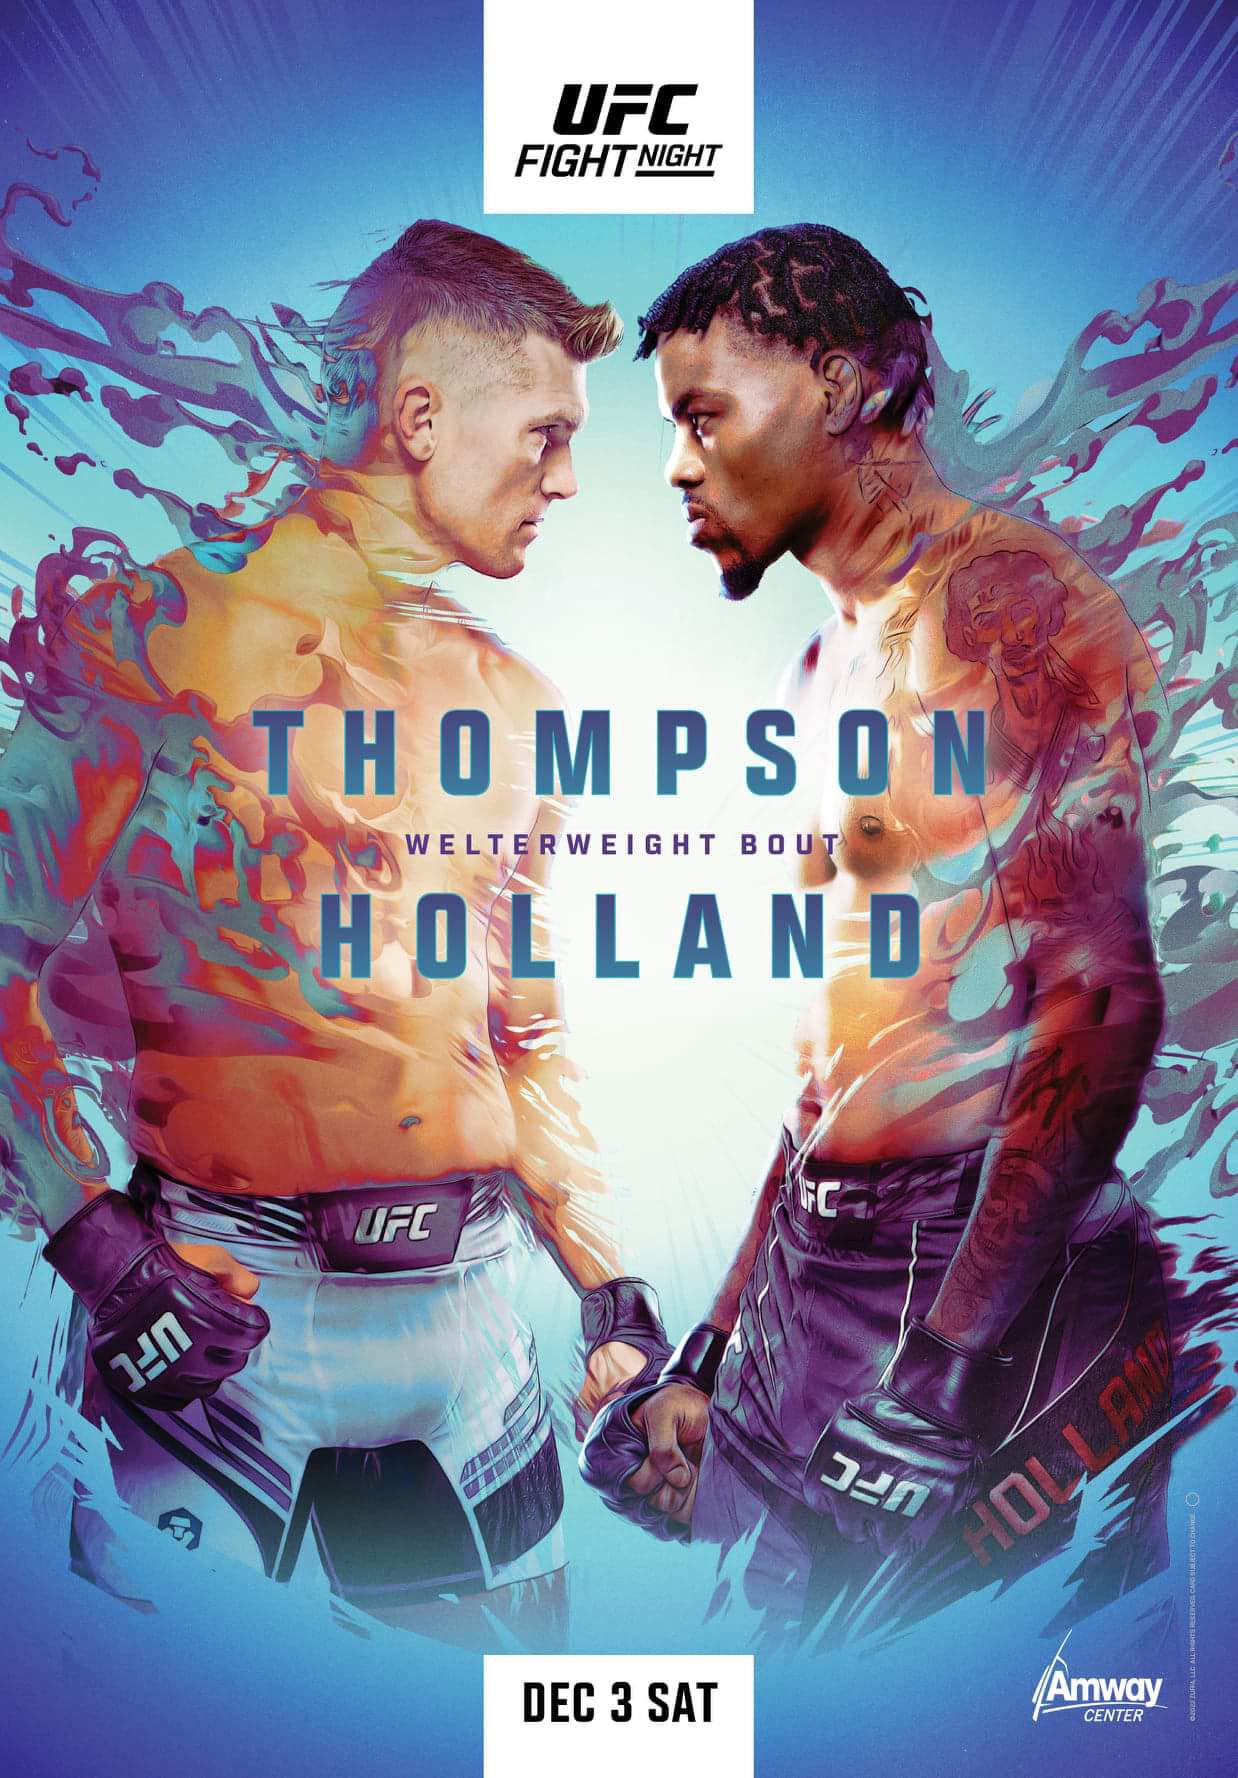 UFC Fight Night - Thompson vs Holland